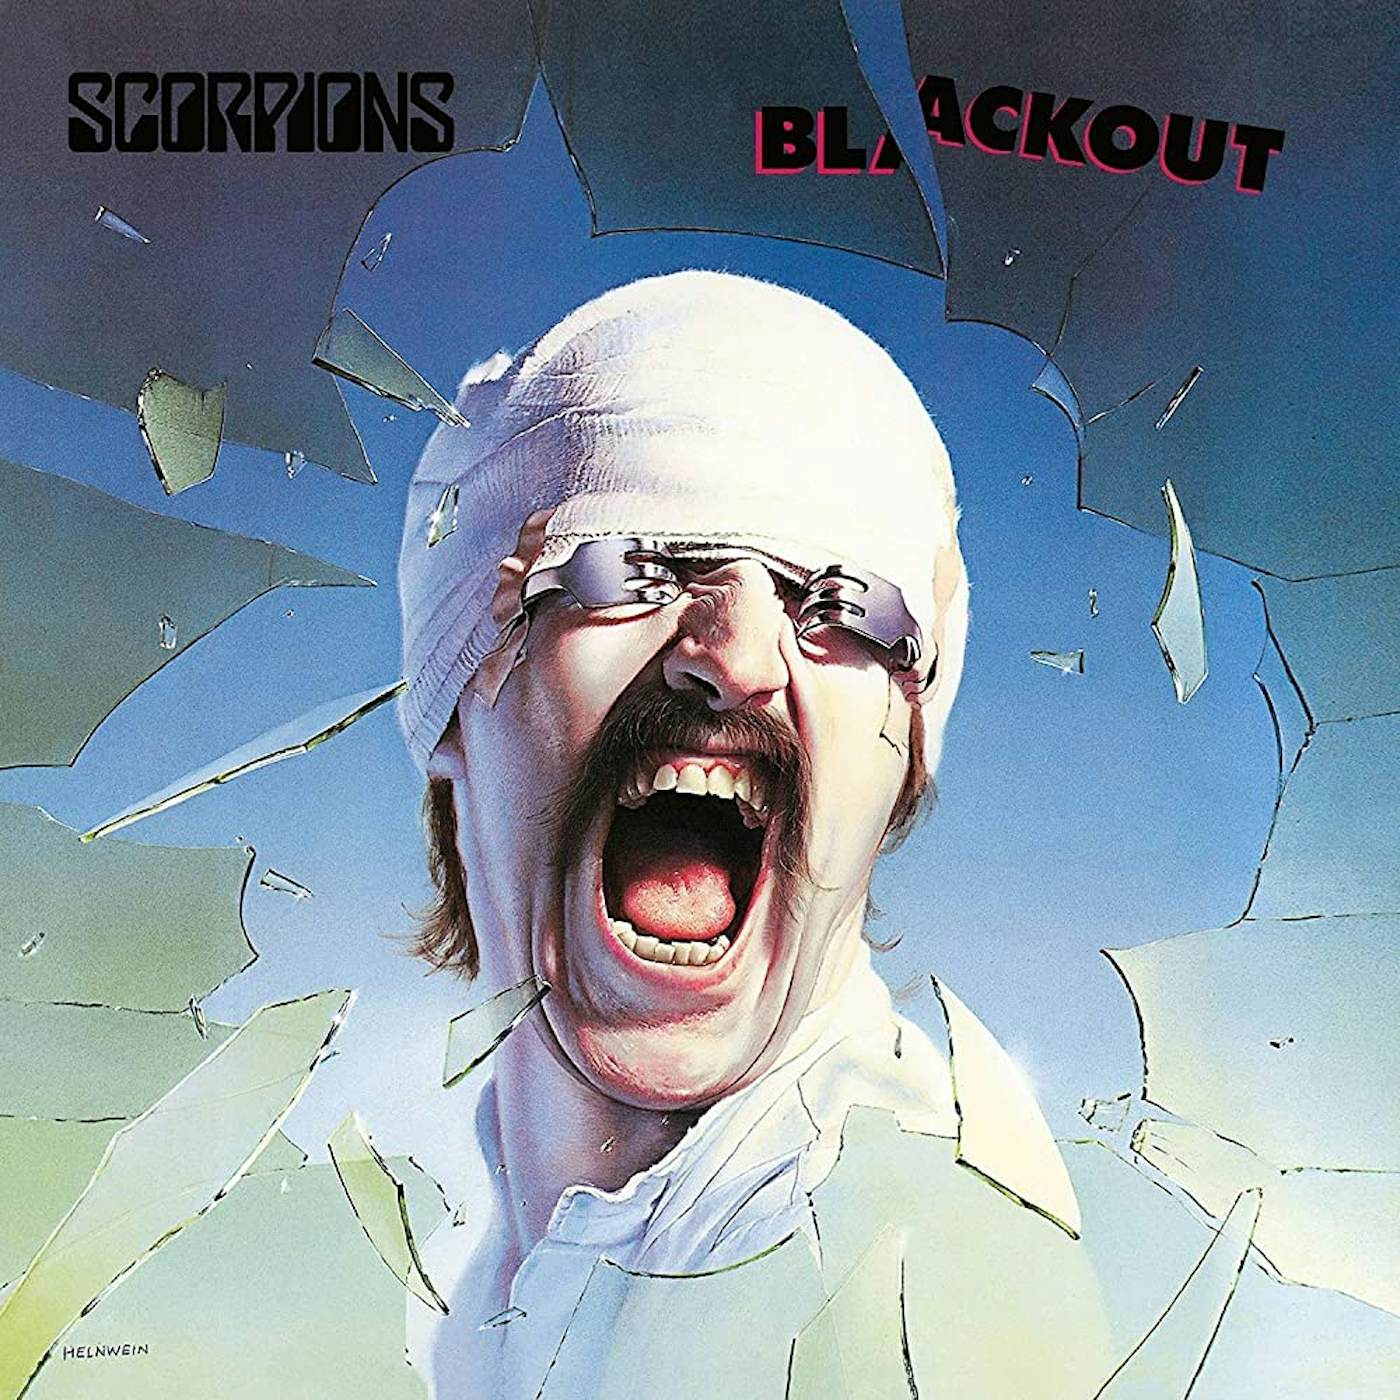  Scorpions - Blackout Limited Edition (Vinyl)